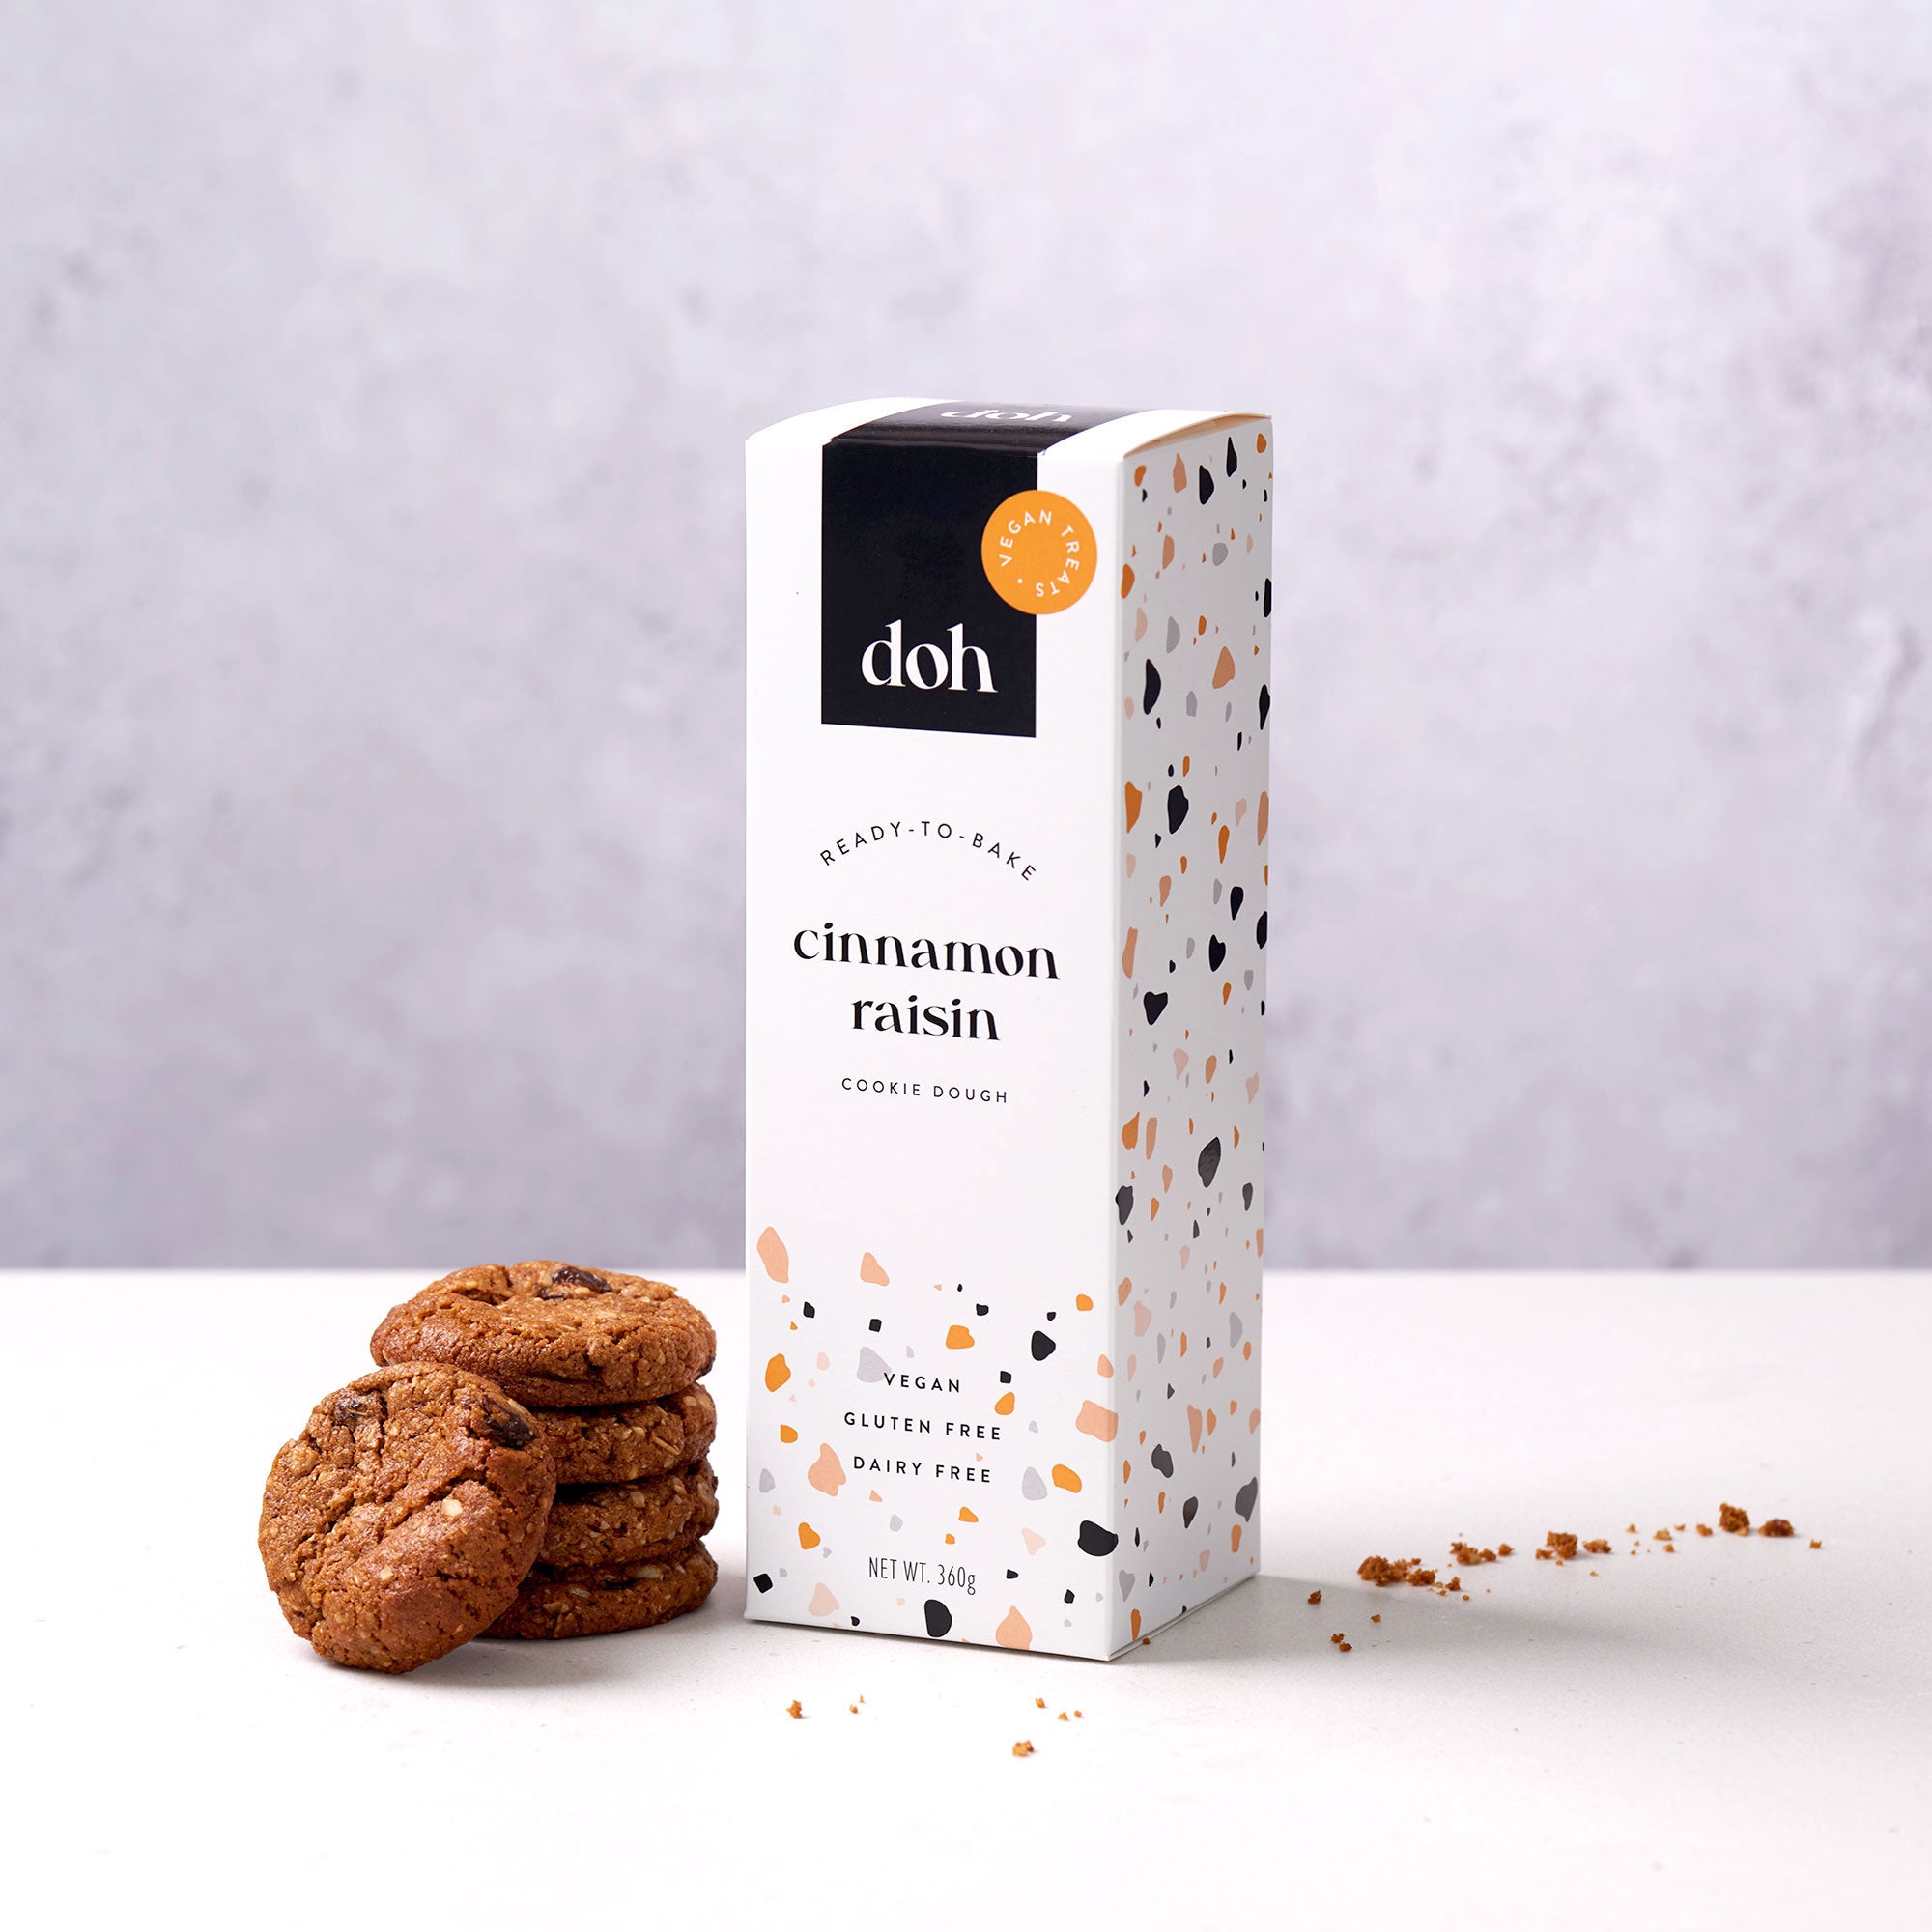 karolina krol studio doh vegan cookie dough cinnamon raisin ready to bake cookies fun minimalist brand design